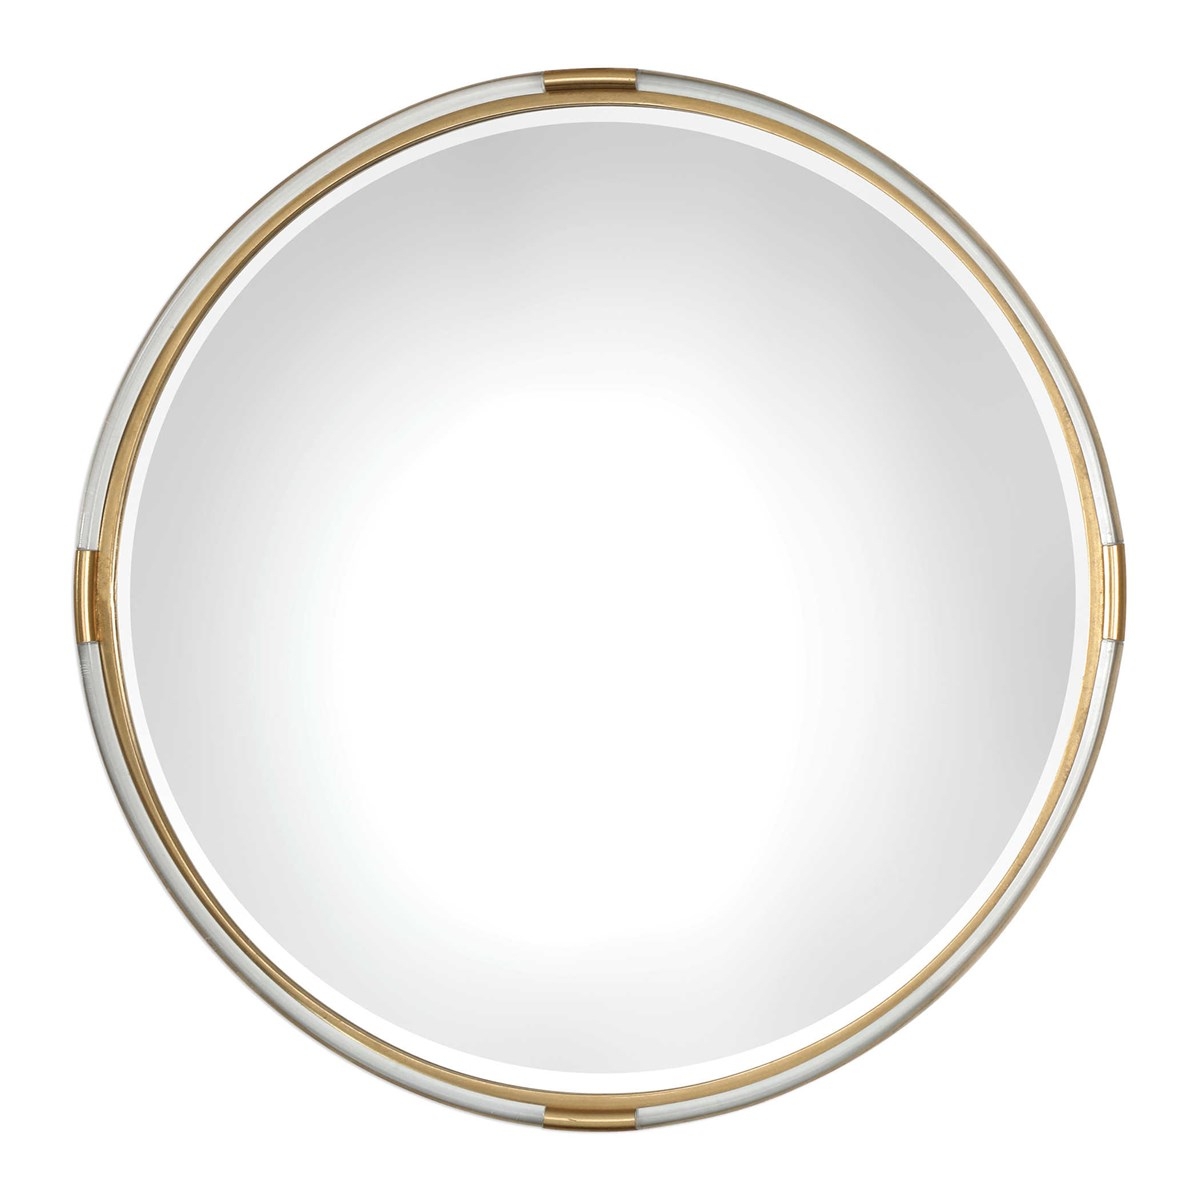 Mackai Round Mirror, Gold - Image 0